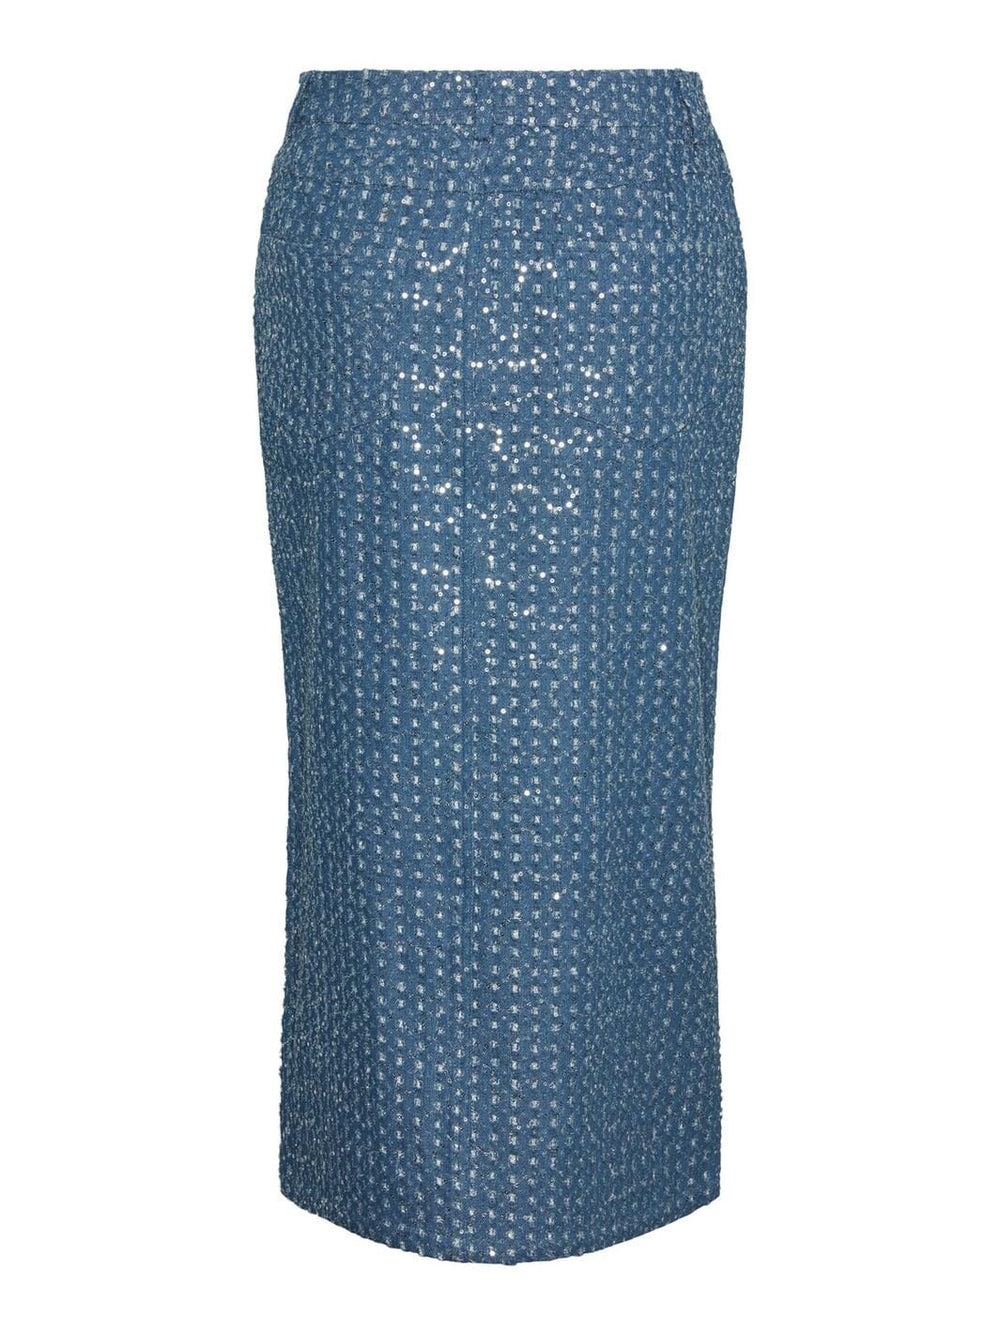 Pieces X Ditte Estrup - Pcnaomi Midi Denim Skirt - 4503433 Medium Blue Denim Sequins